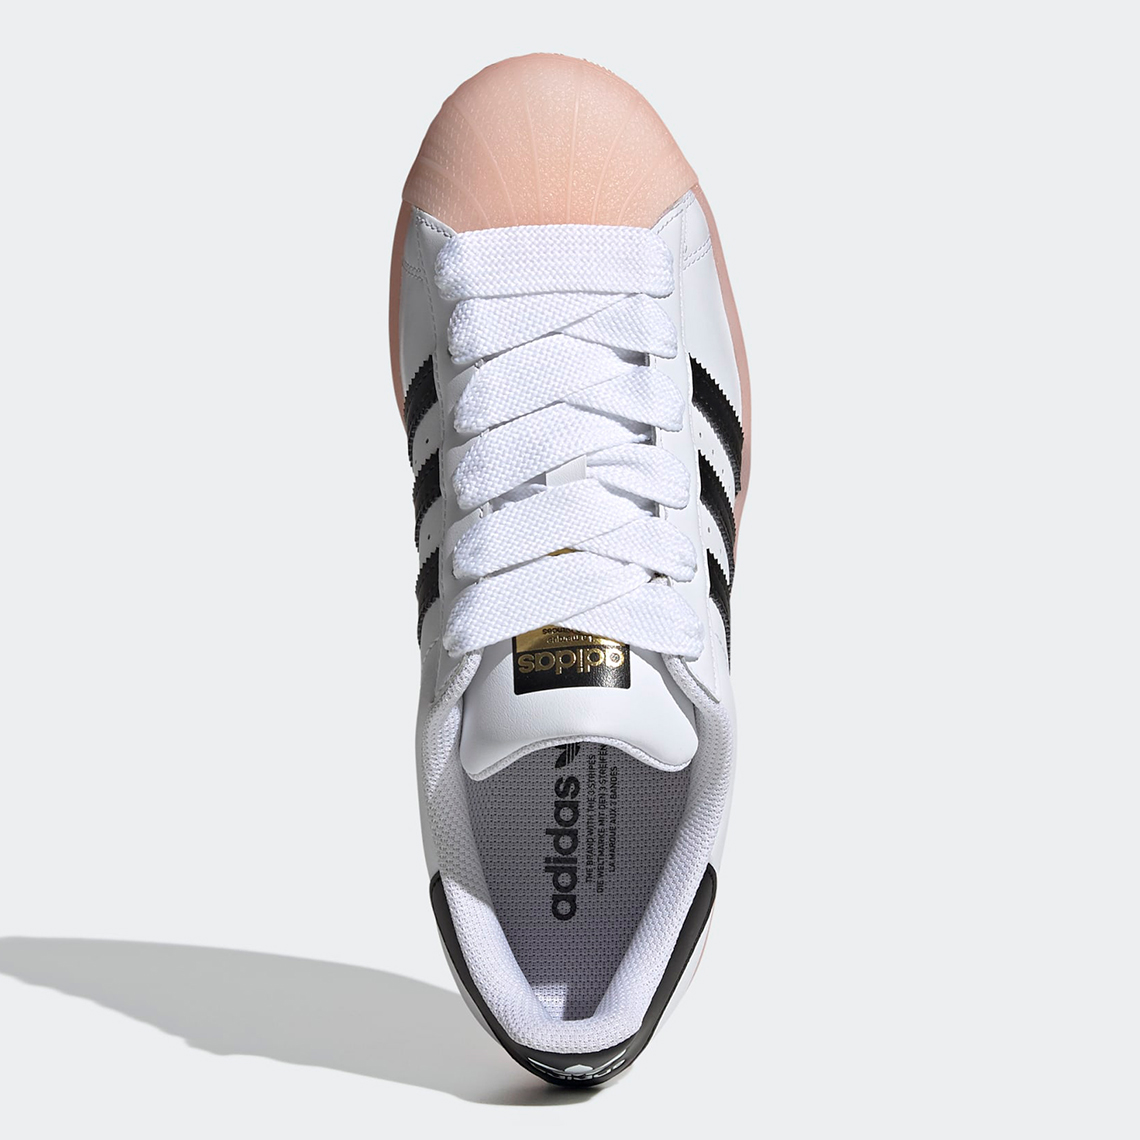 adidas Superstar FW3553 FW3554 Release Date | SneakerNews.com